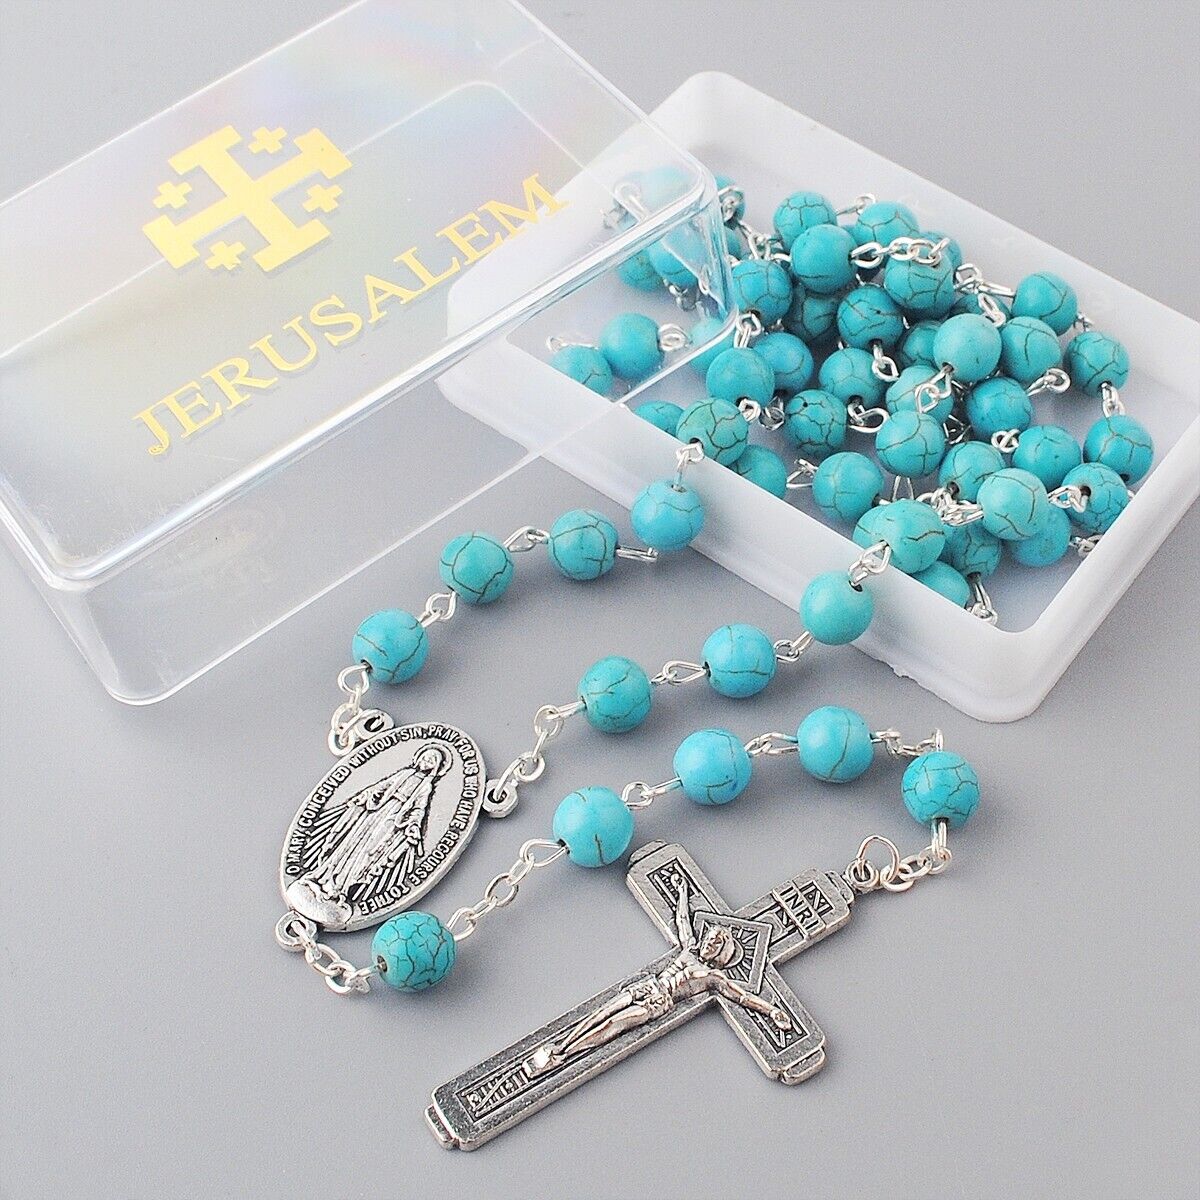 Catholic Jerusalem Rosary Necklace Blue Turquoise beads Miraculous Medal & cross